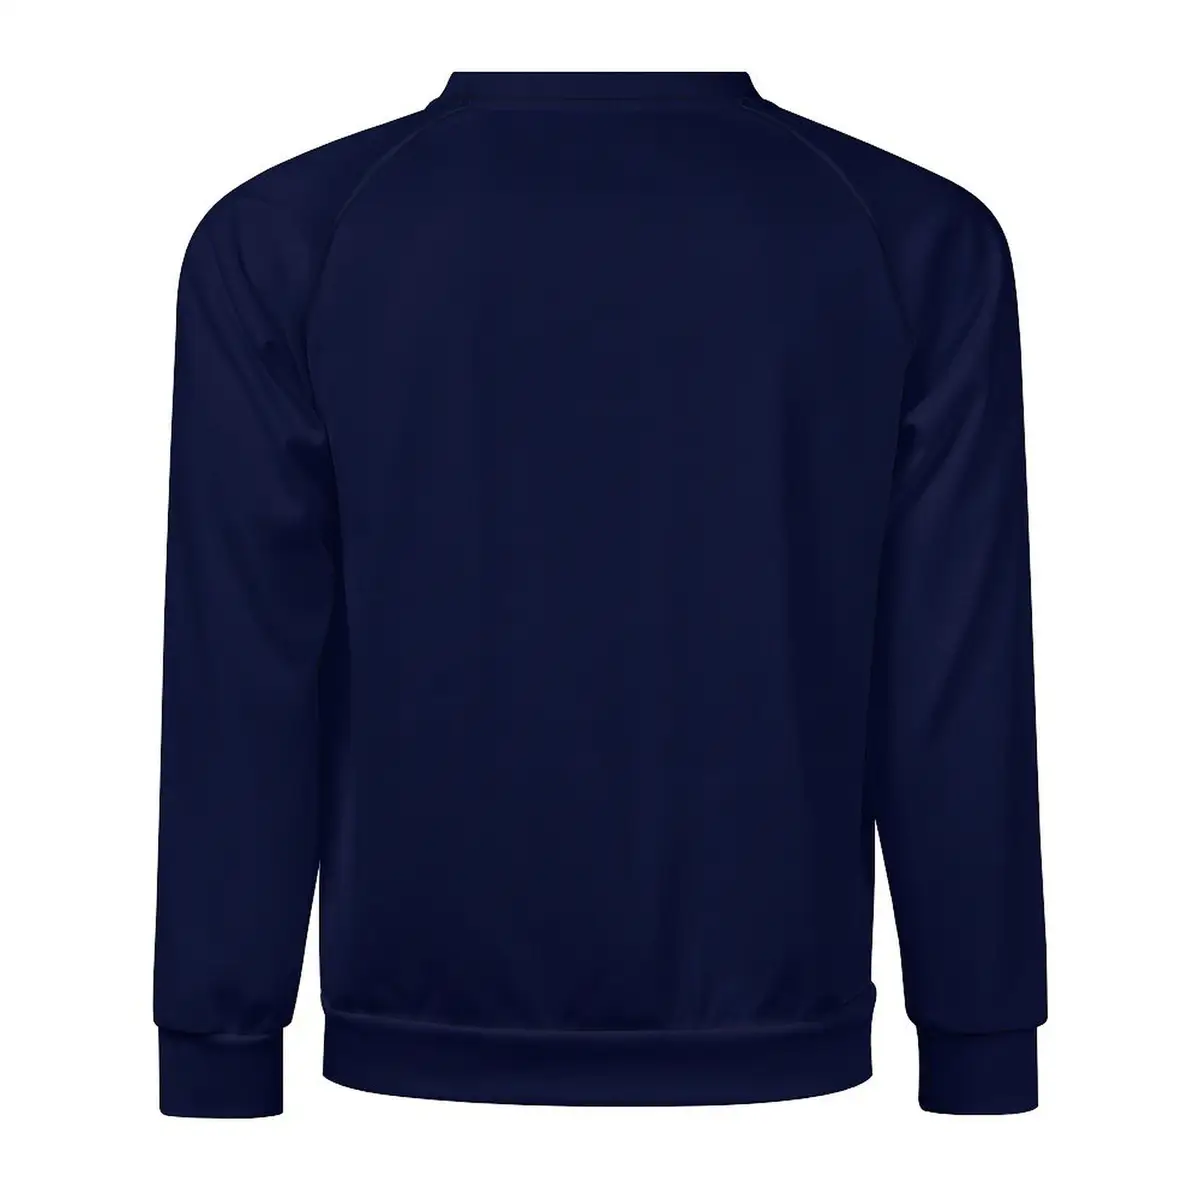 Dark Blue Pac-Man Men-Youth Crewneck Sweatshirt, Vintage Video Game Apparel Unisex Comfortable Sweater Cool Kiddo 14